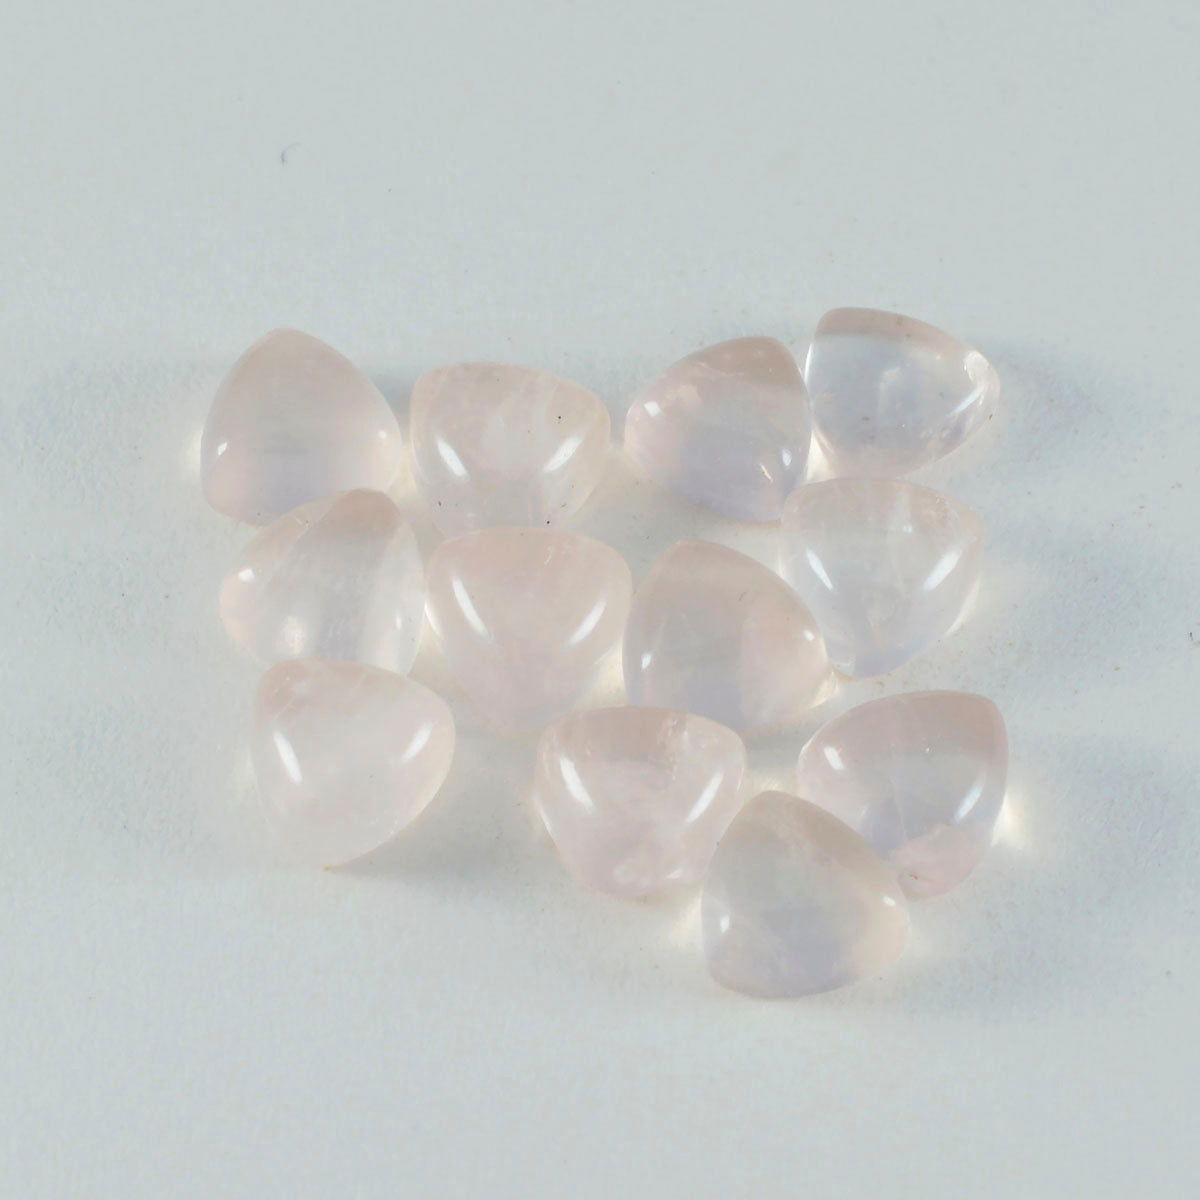 Riyogems 1PC roze rozenkwarts cabochon 15x15 mm biljoen vorm aantrekkelijke kwaliteit losse steen